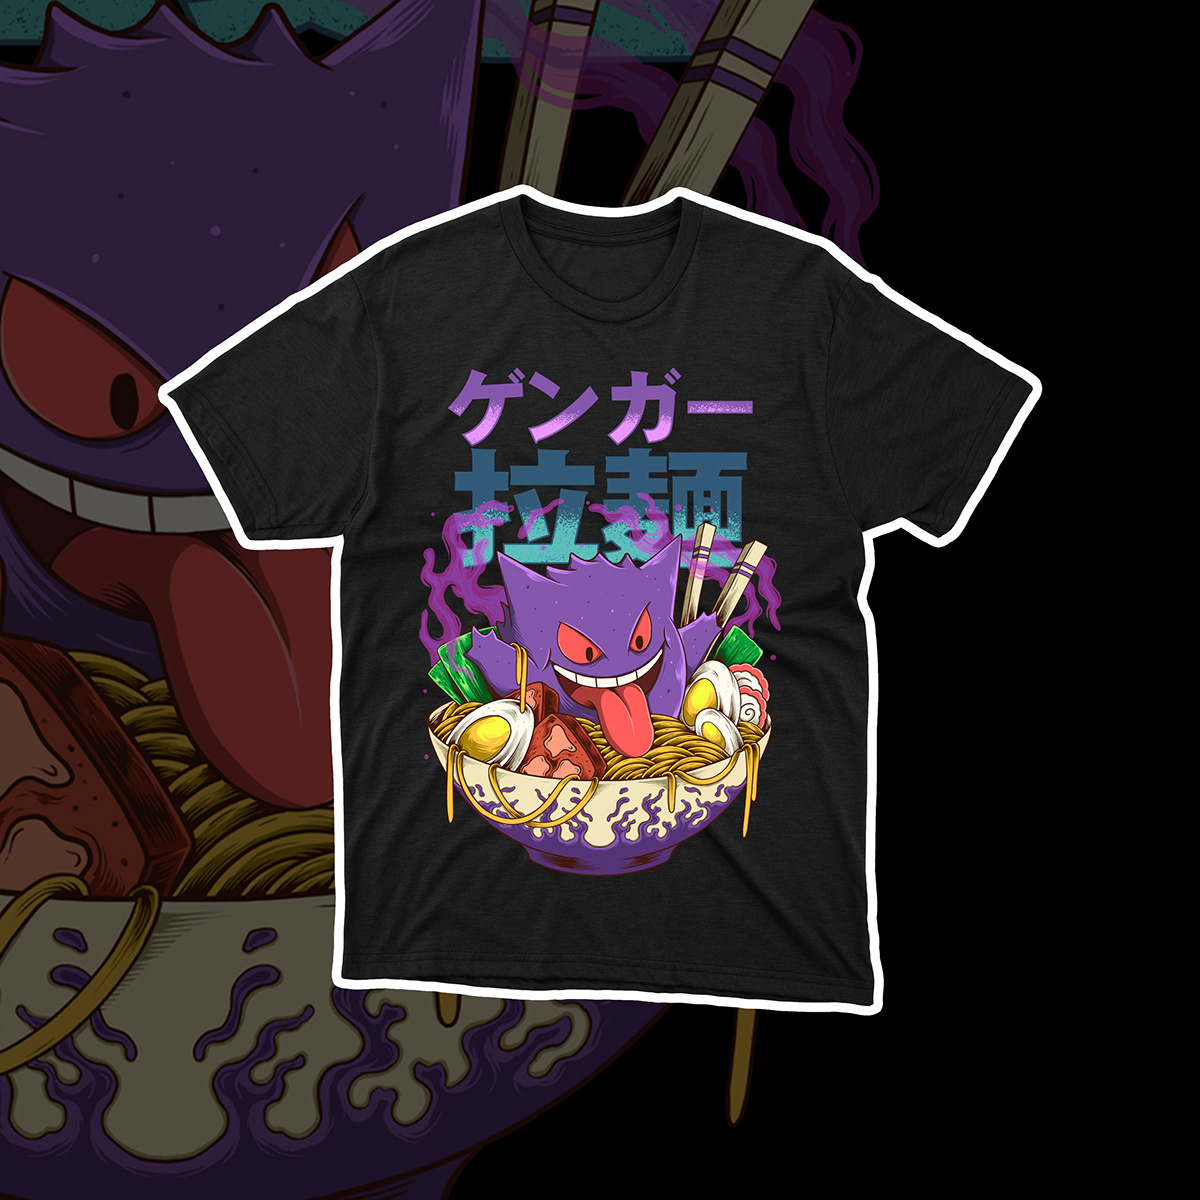 Pokemon fanart anime digital illustration tshirt T-Shirt Design t-shirts t-shirt illustration Clothing t-shirt